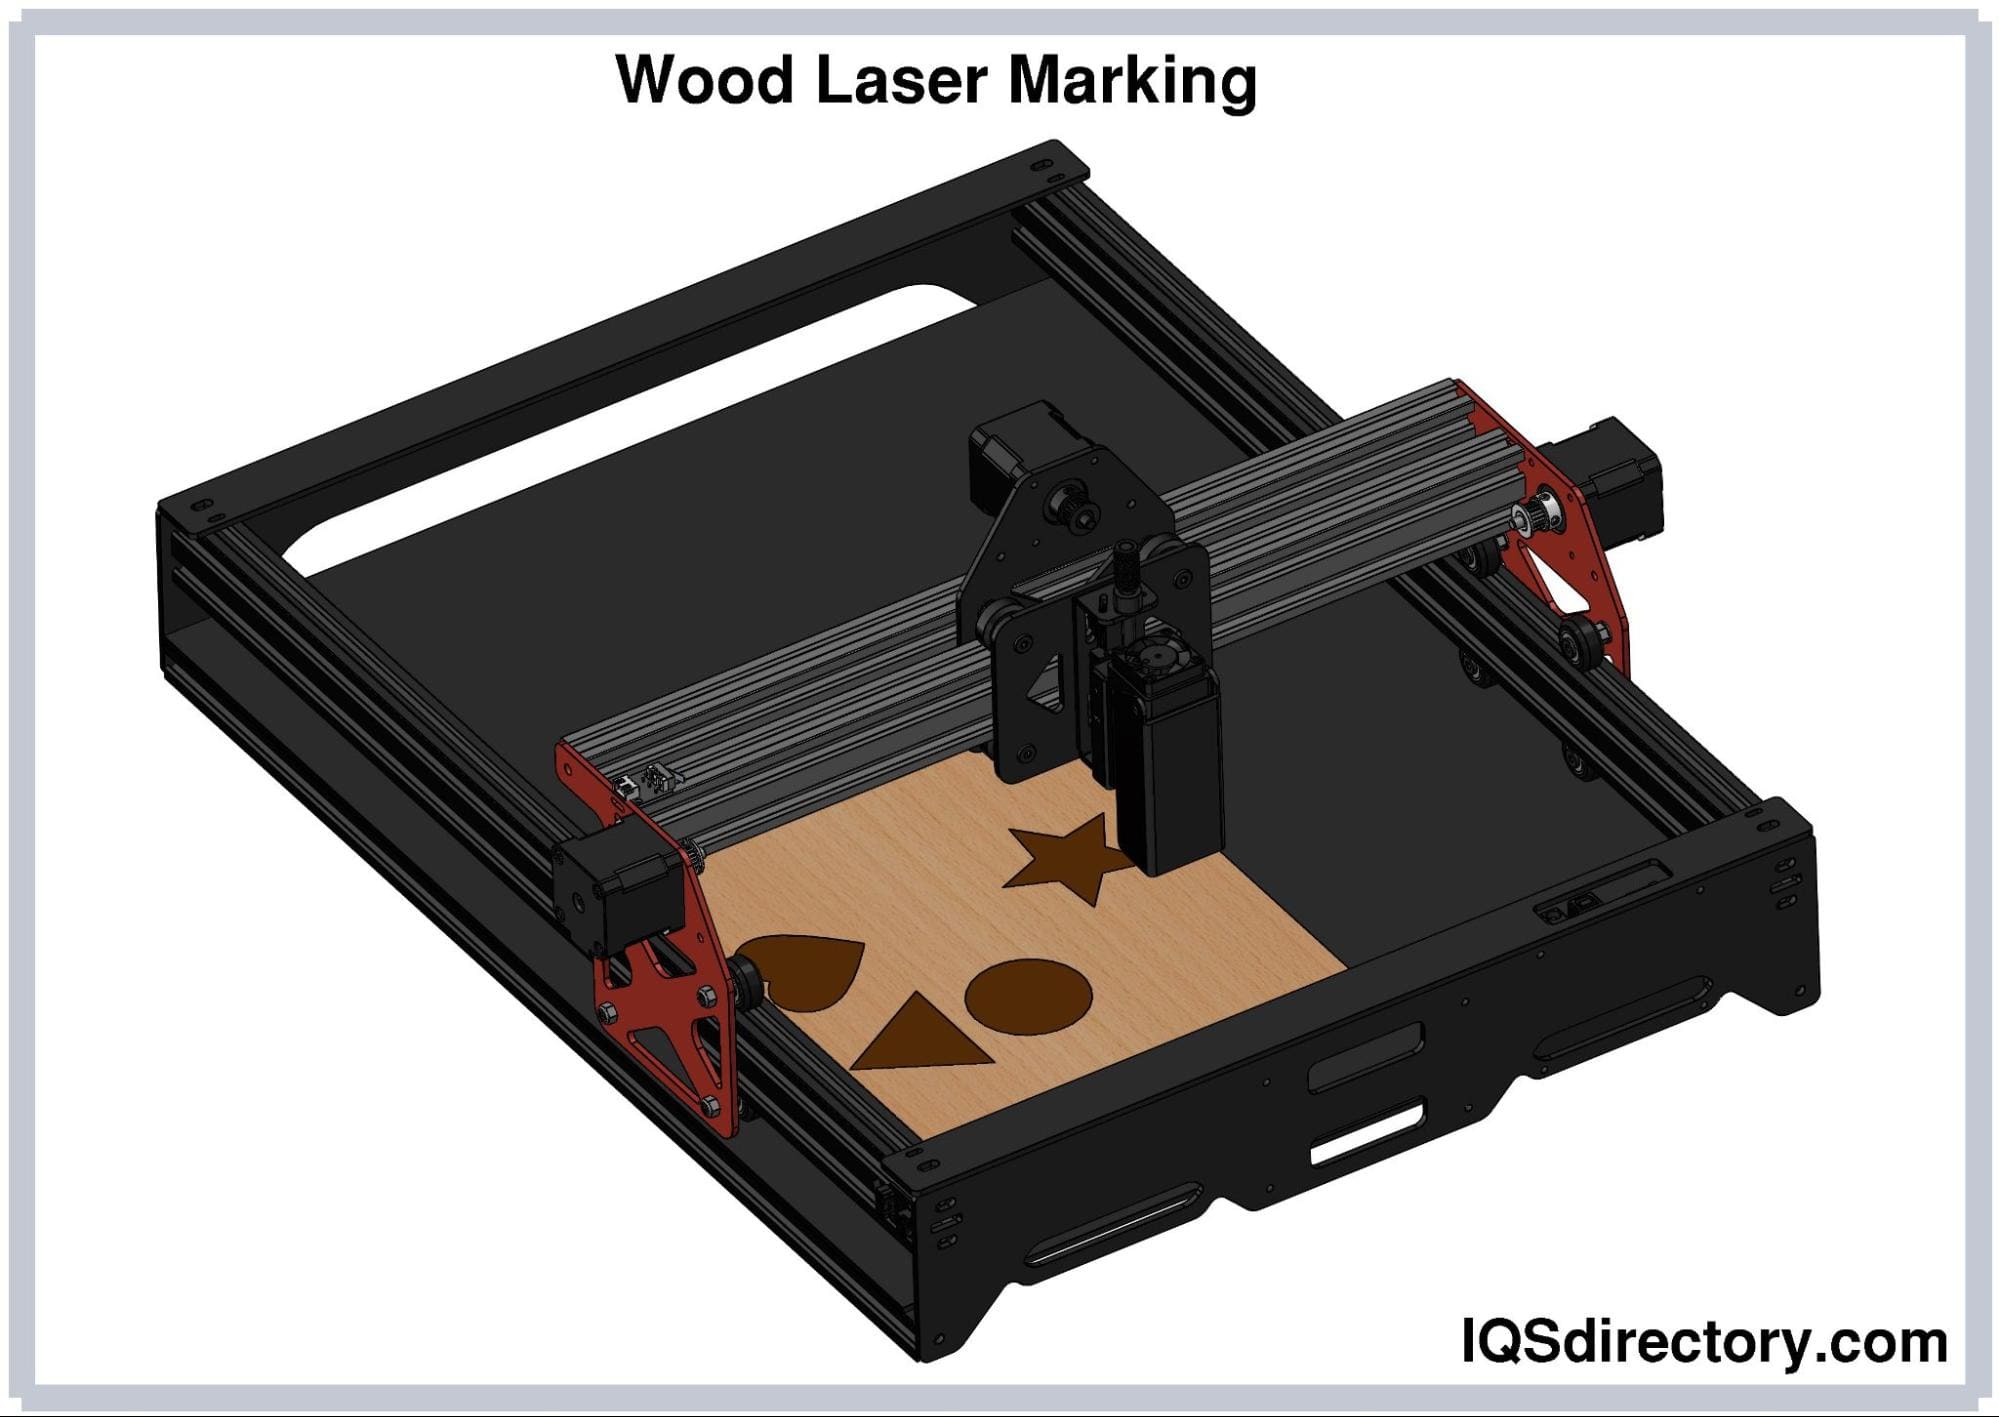 Wood Laser Marking